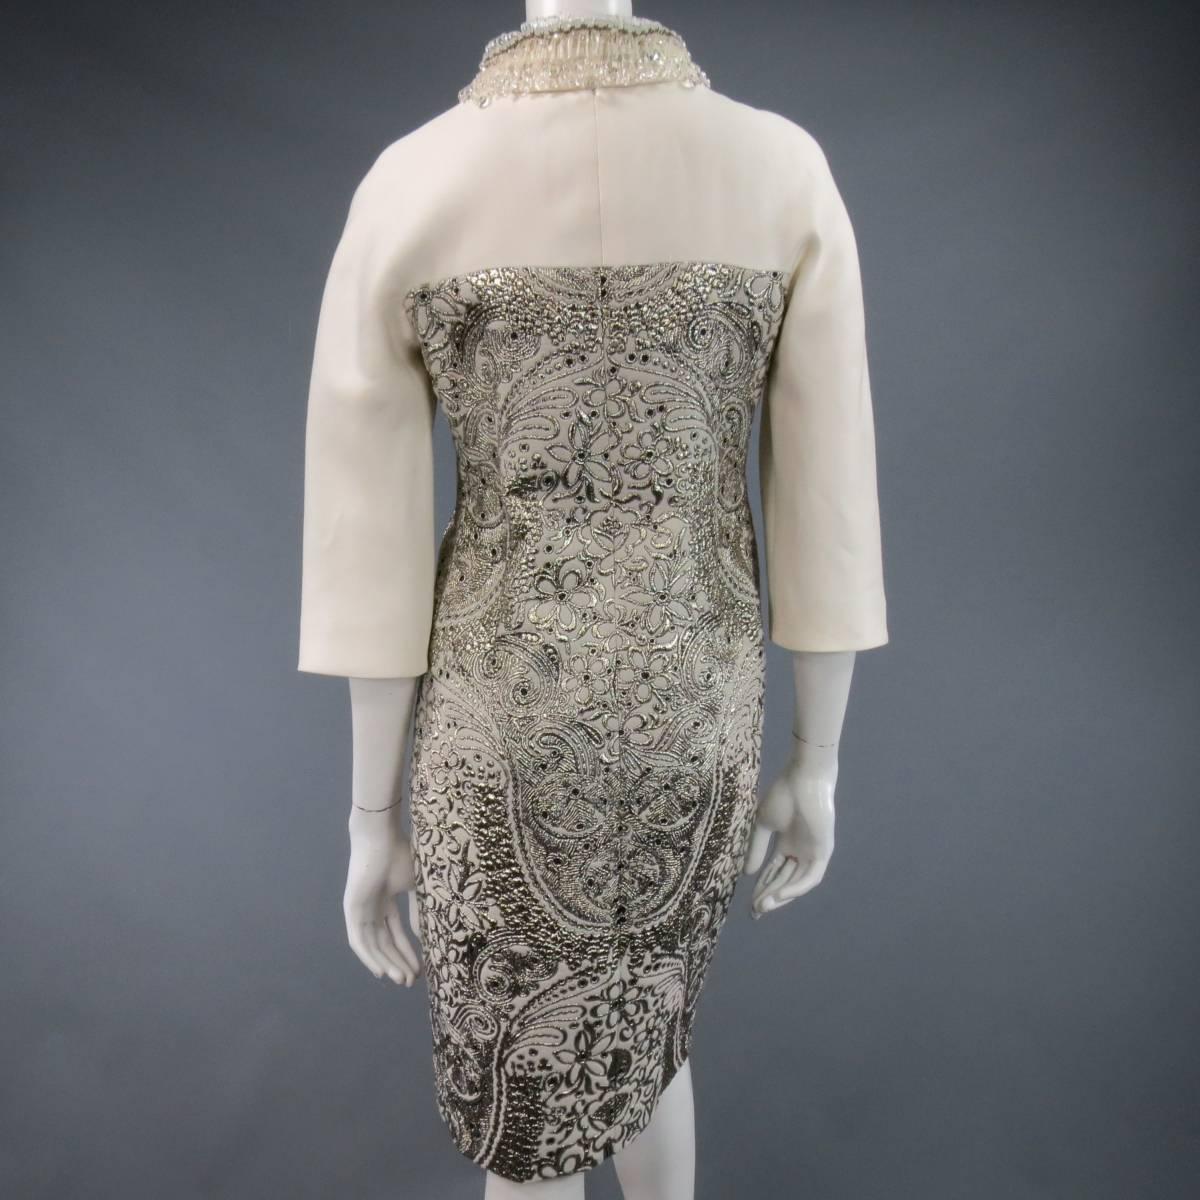 Giambattista Valli Couture Cream and Silver Beaded Coat Dress - Retail $9600 2